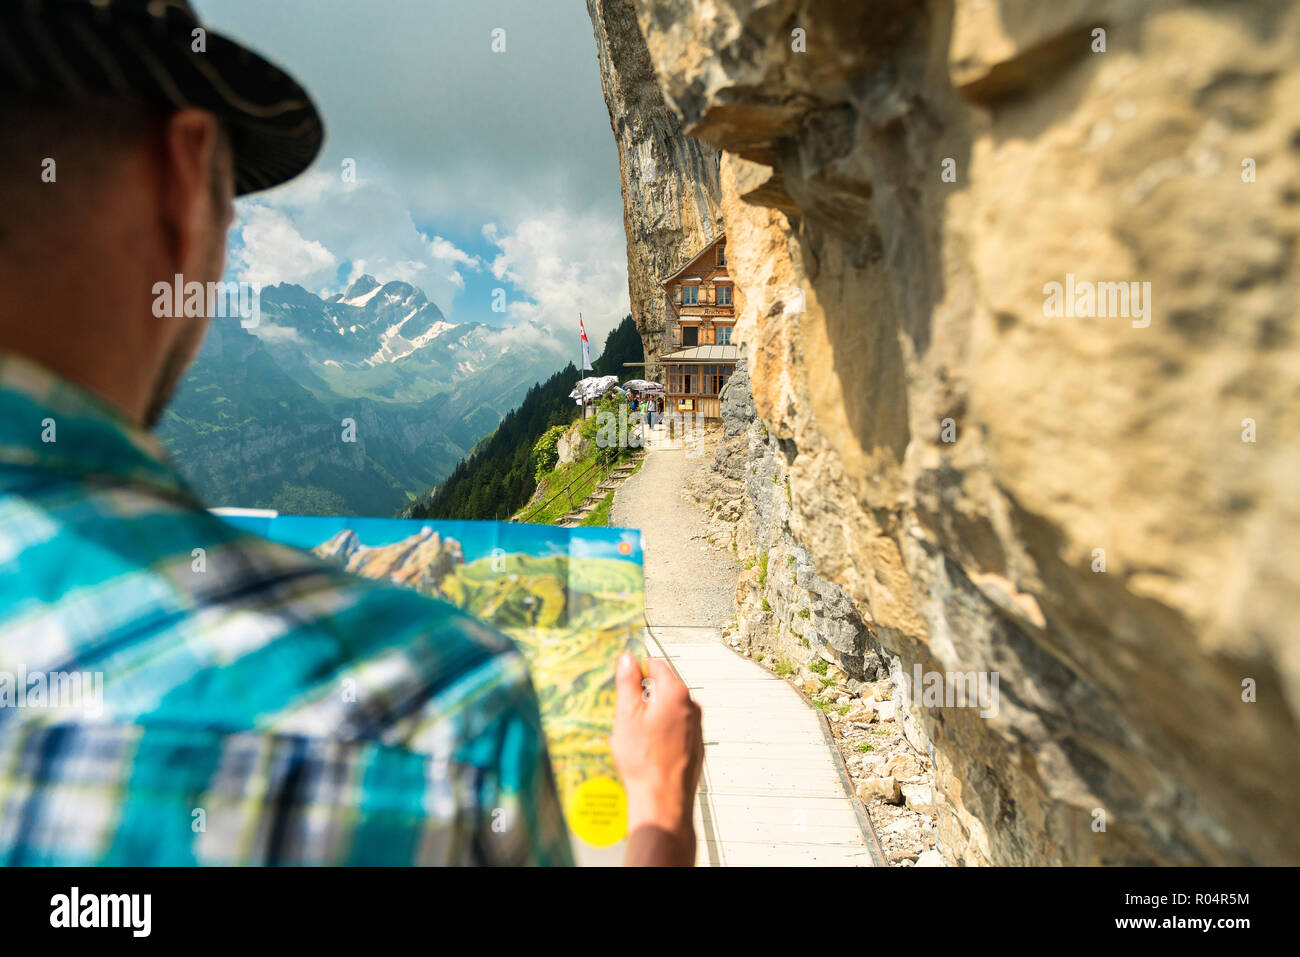 El hombre mira el mapa de rutas de senderismo, Aescher-Wildkirchli Gasthaus, Ebenalp, Appenzell Innerrhoden, Suiza, Europa Foto de stock